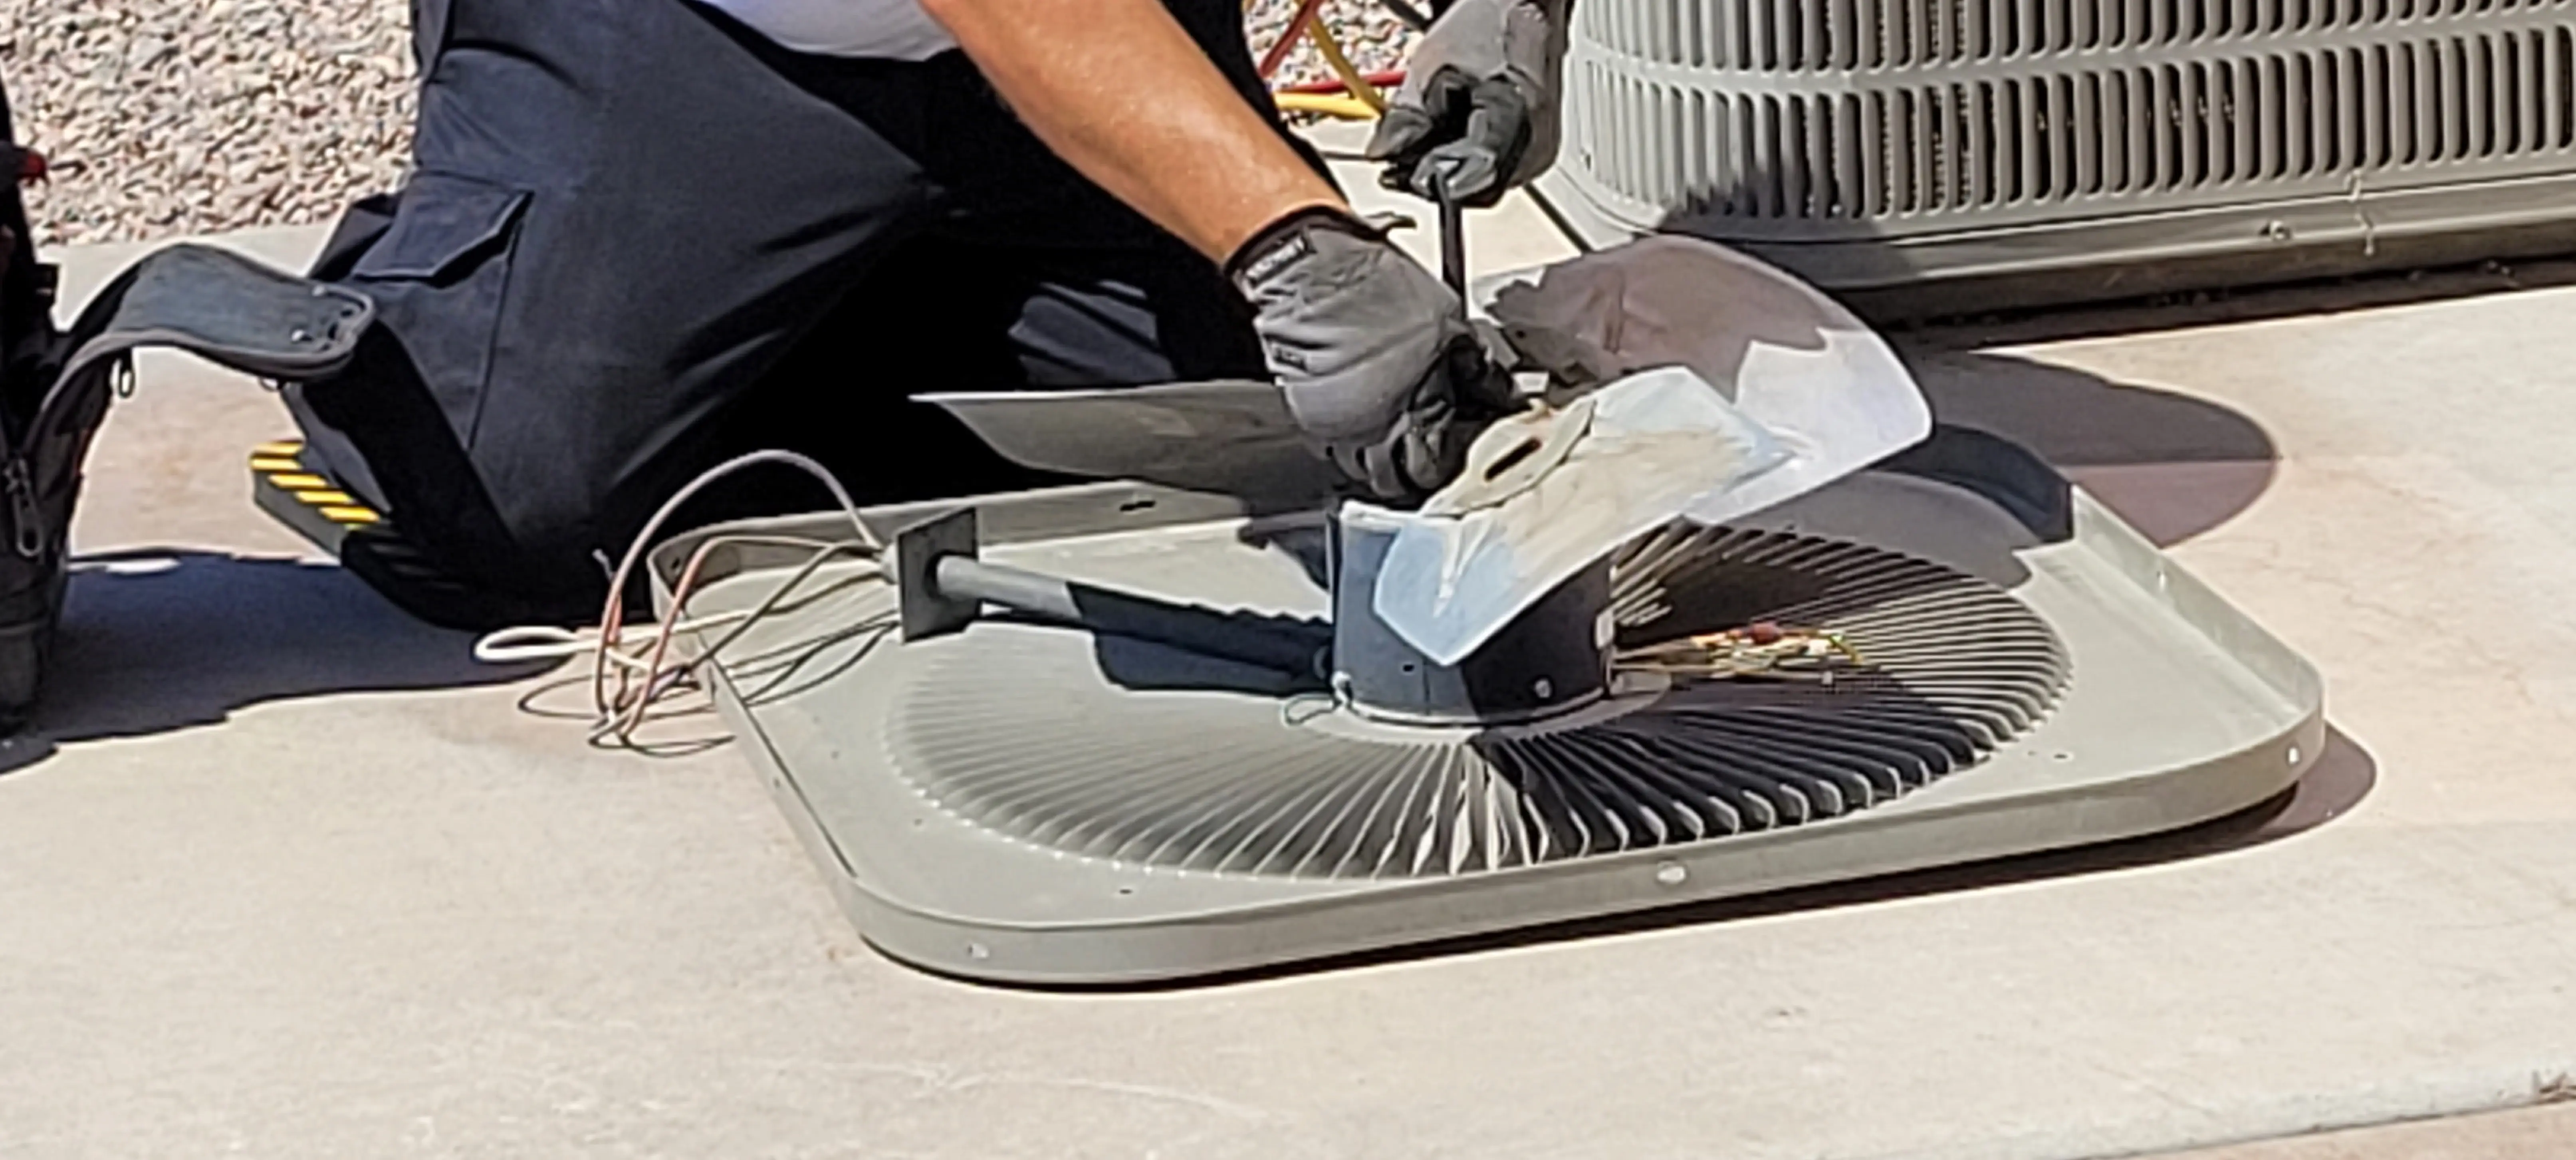 Air-Conditioning-Repair--in-Adkins-Texas-Air-Conditioning-Repair-4296816-image